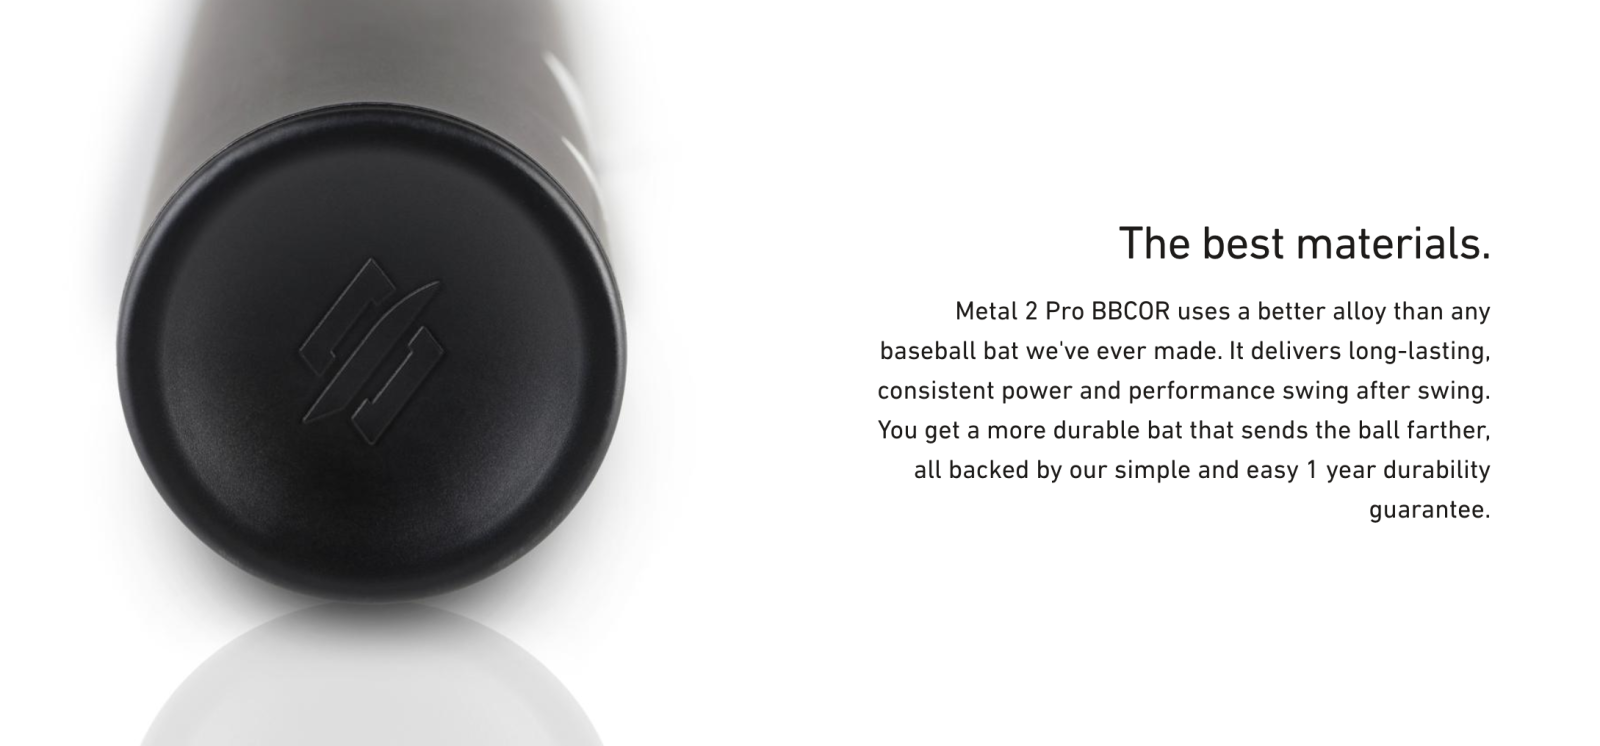 The Best BBCOR Bat in Baseball, Shop Metal 2 Pro BBCOR Bats